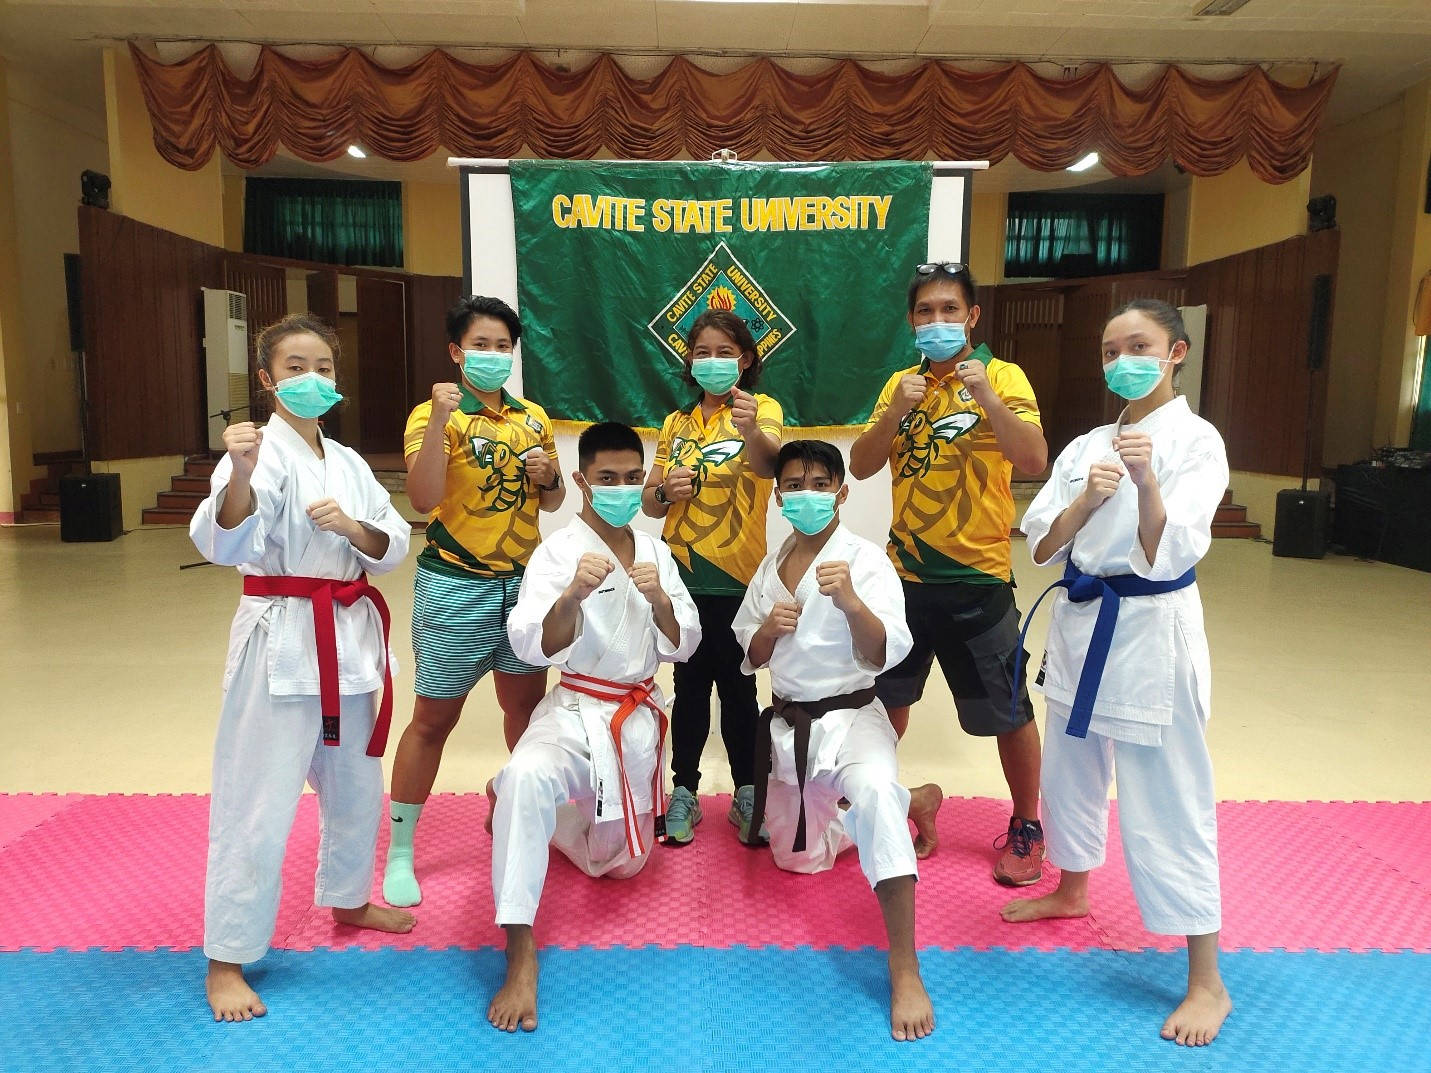 Karate Students In Masks Cavite State University Wallpaper